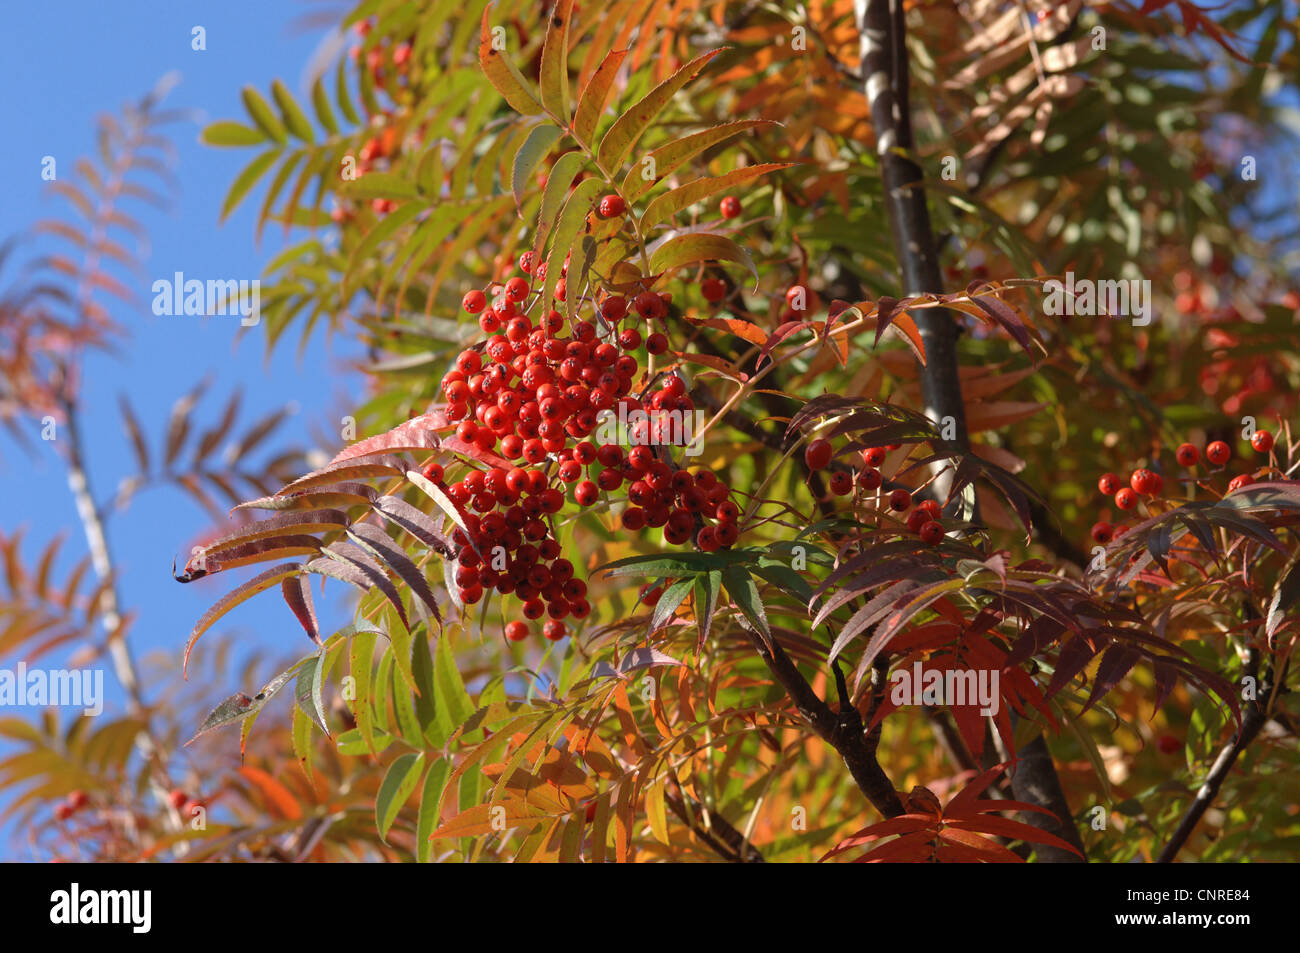 Japanese Whitebeam (Sorbus commixta 'Carmencita', Sorbus commixta Carmencita), with fruits in autumn colouration Stock Photo